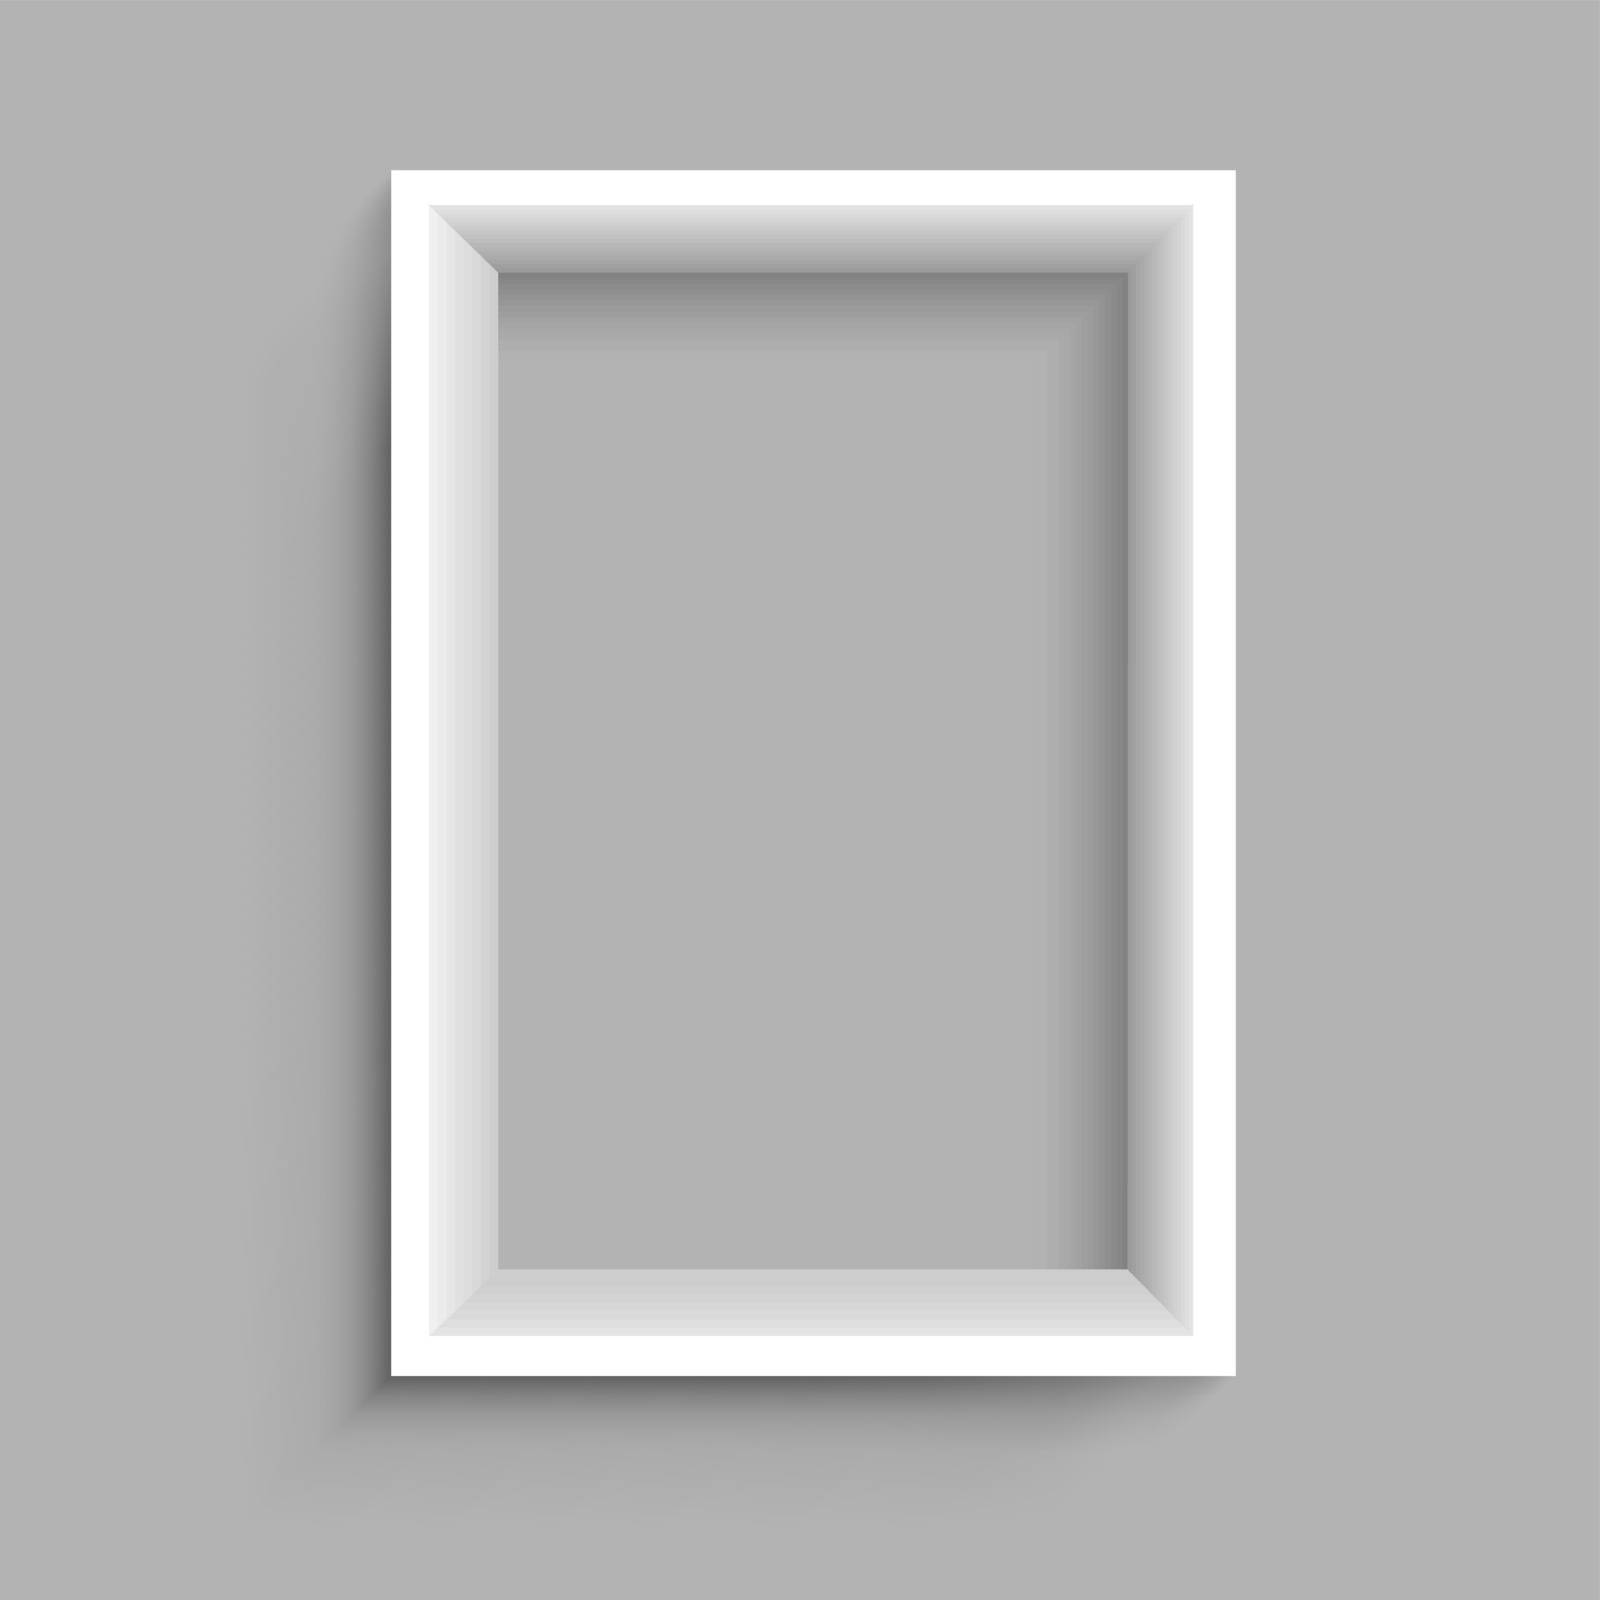 Rectangular vertical white shelf by romvo